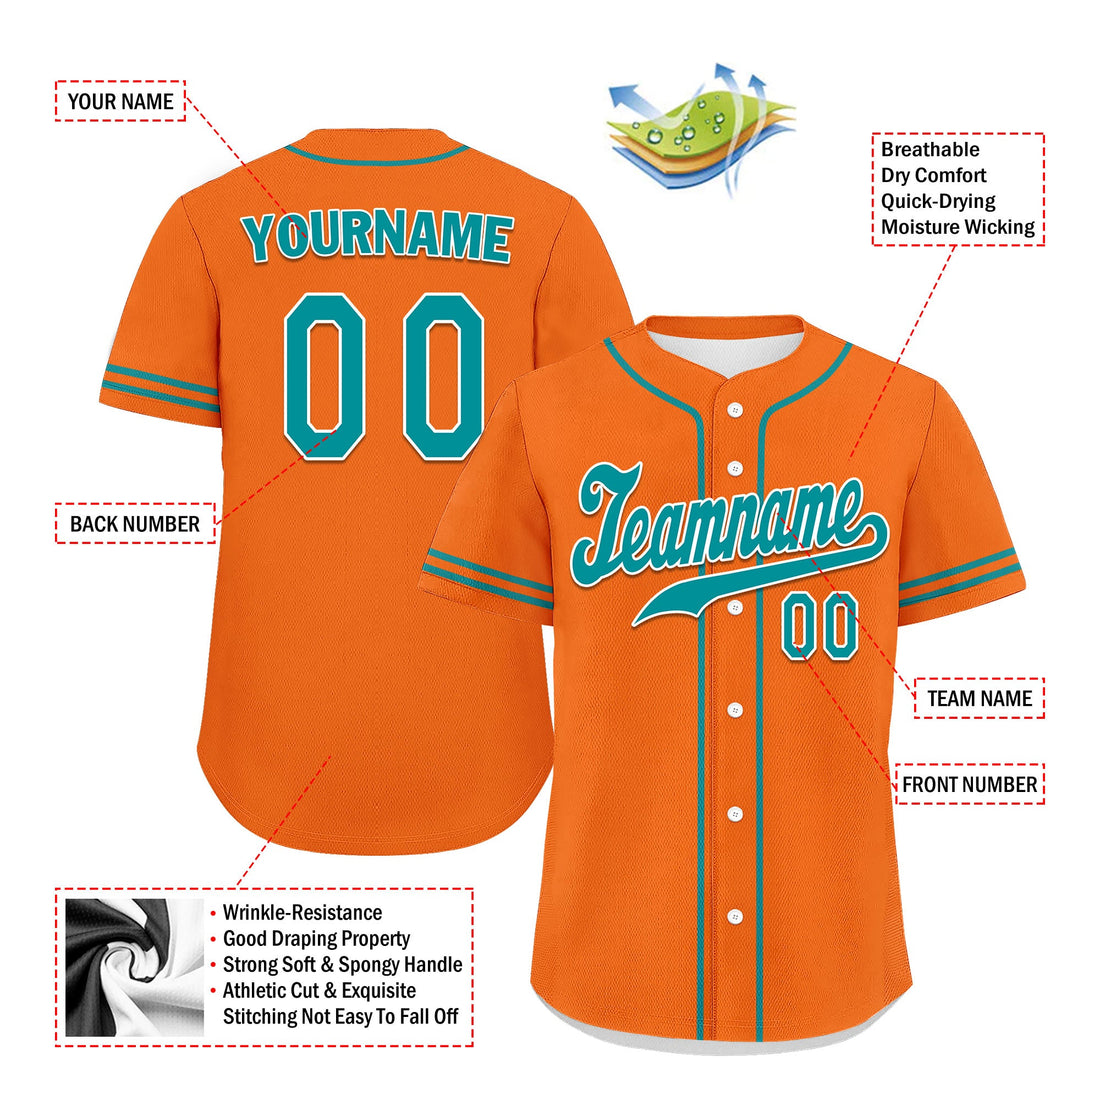 Custom Orange Classic Style Cyan Personalized Authentic Baseball Jersey UN002-bd0b00d8-e